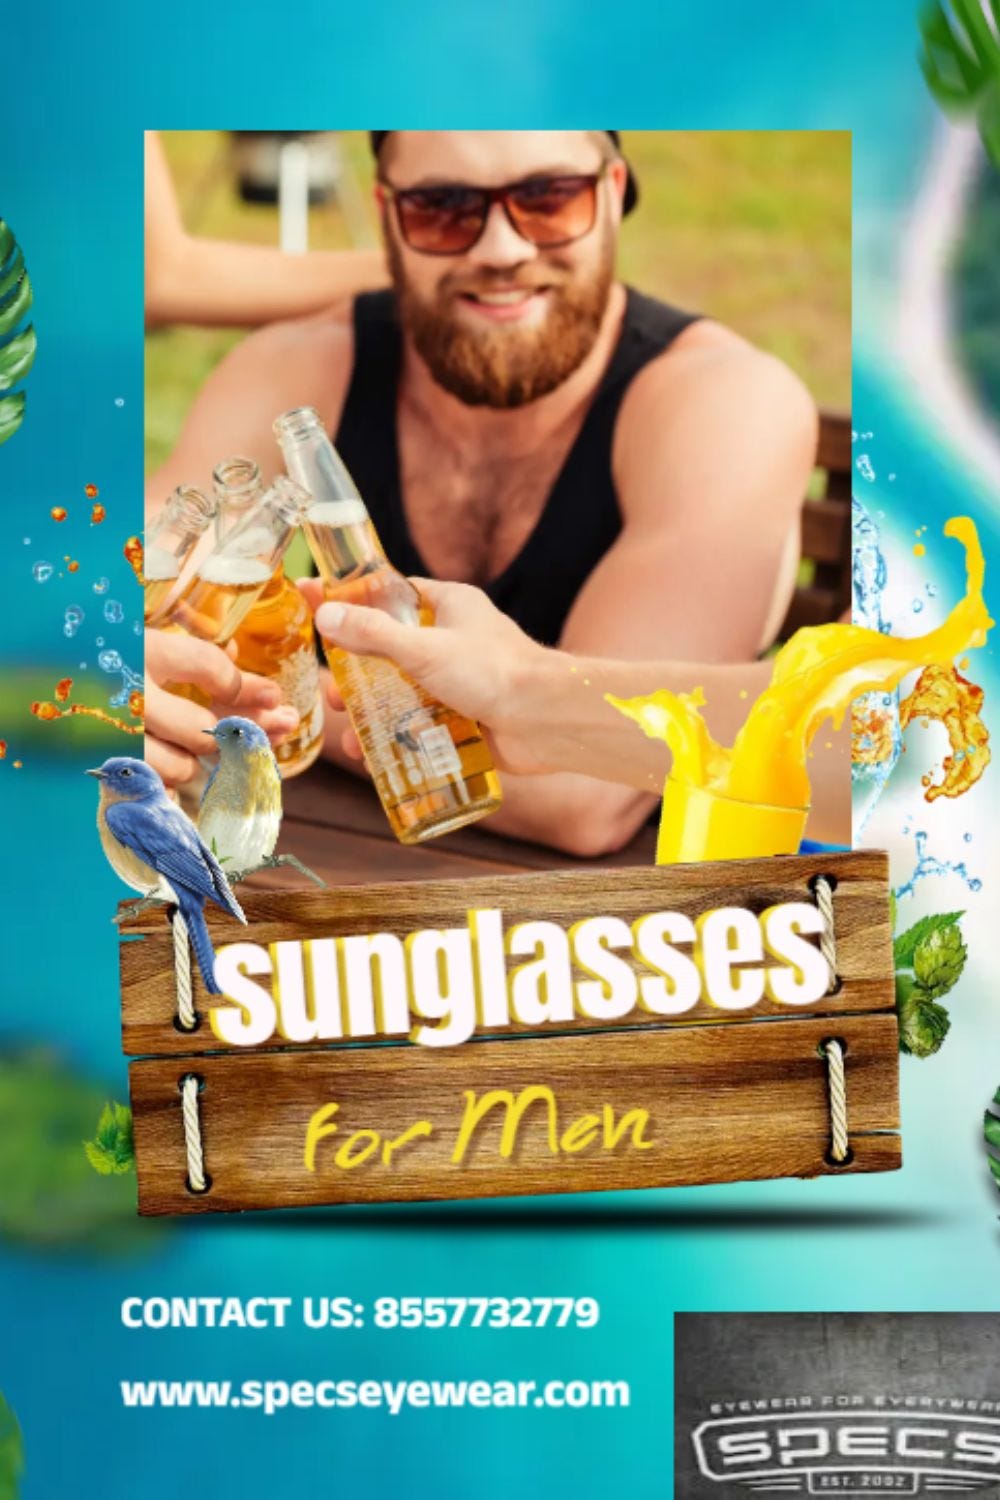 Best Sunglasses For Men - Specs Eyewear - Medium